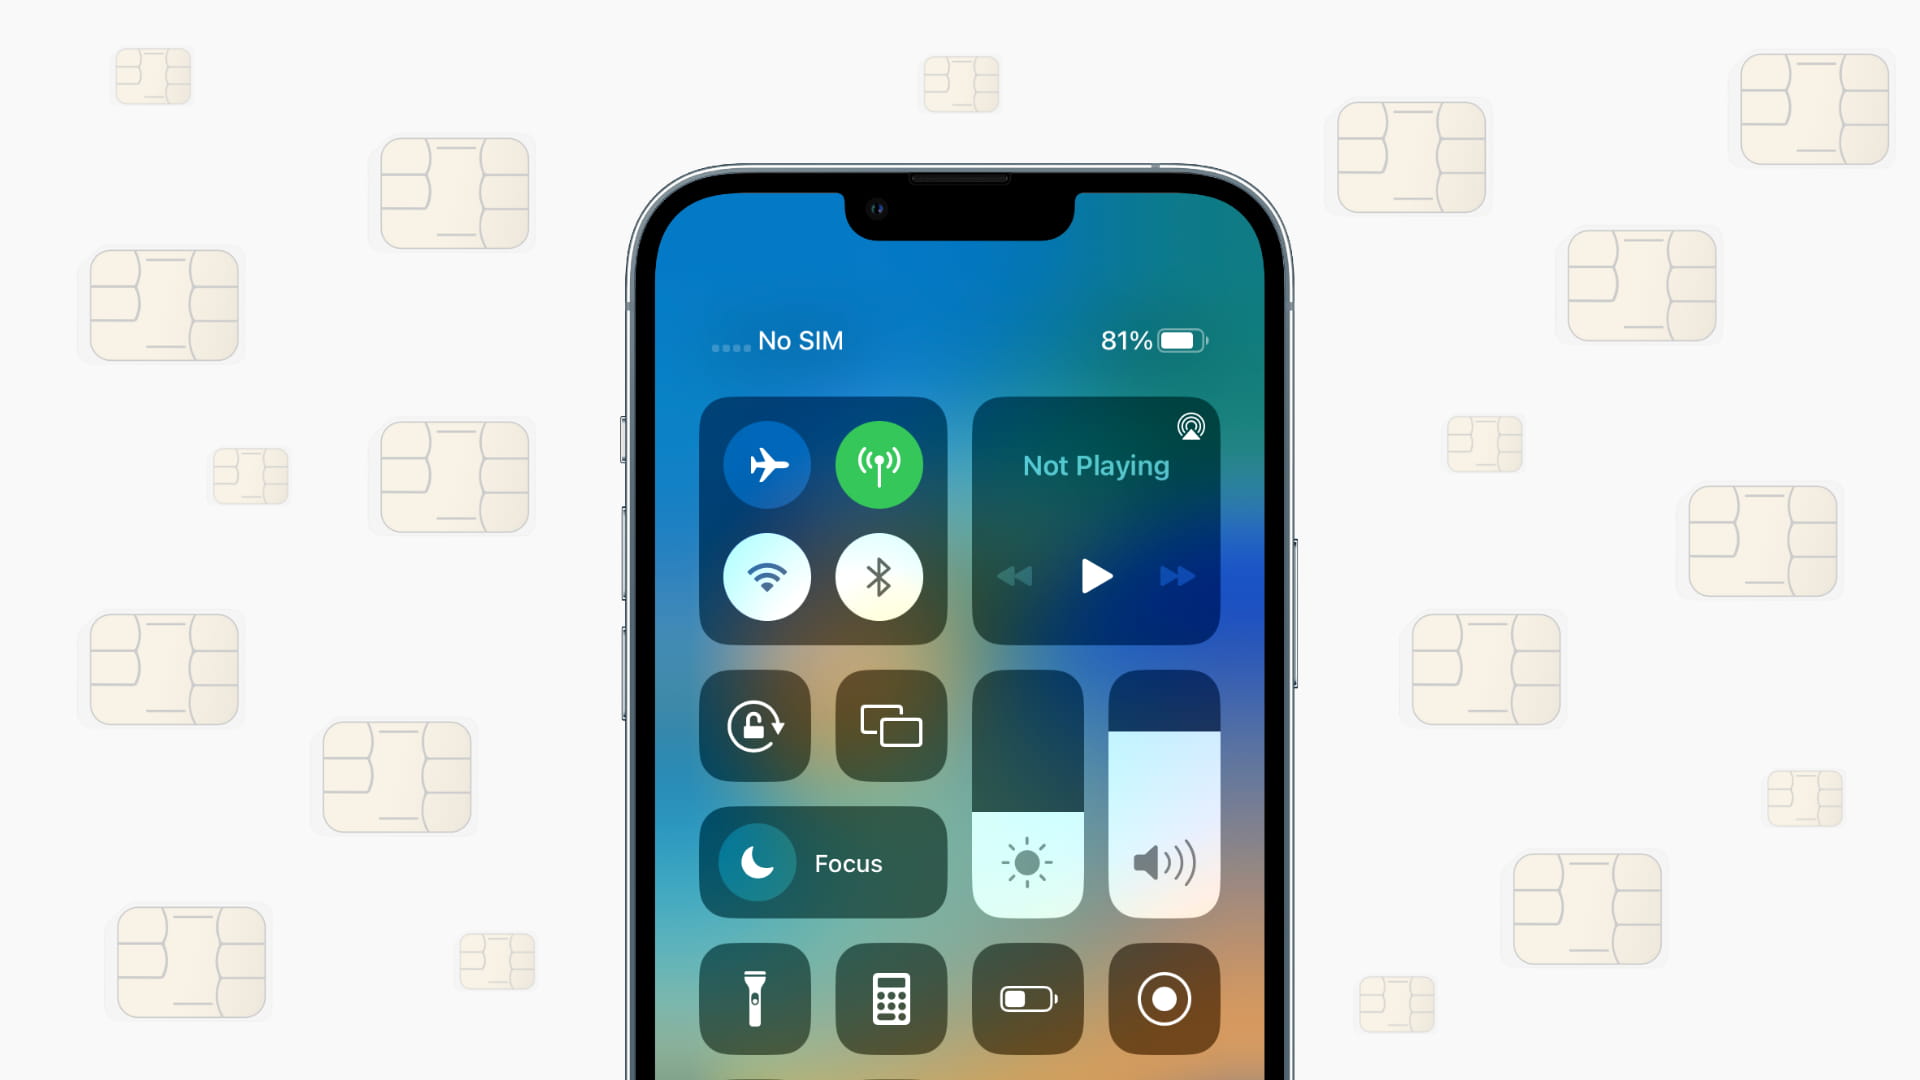 iPhone showing No SIM error on screen